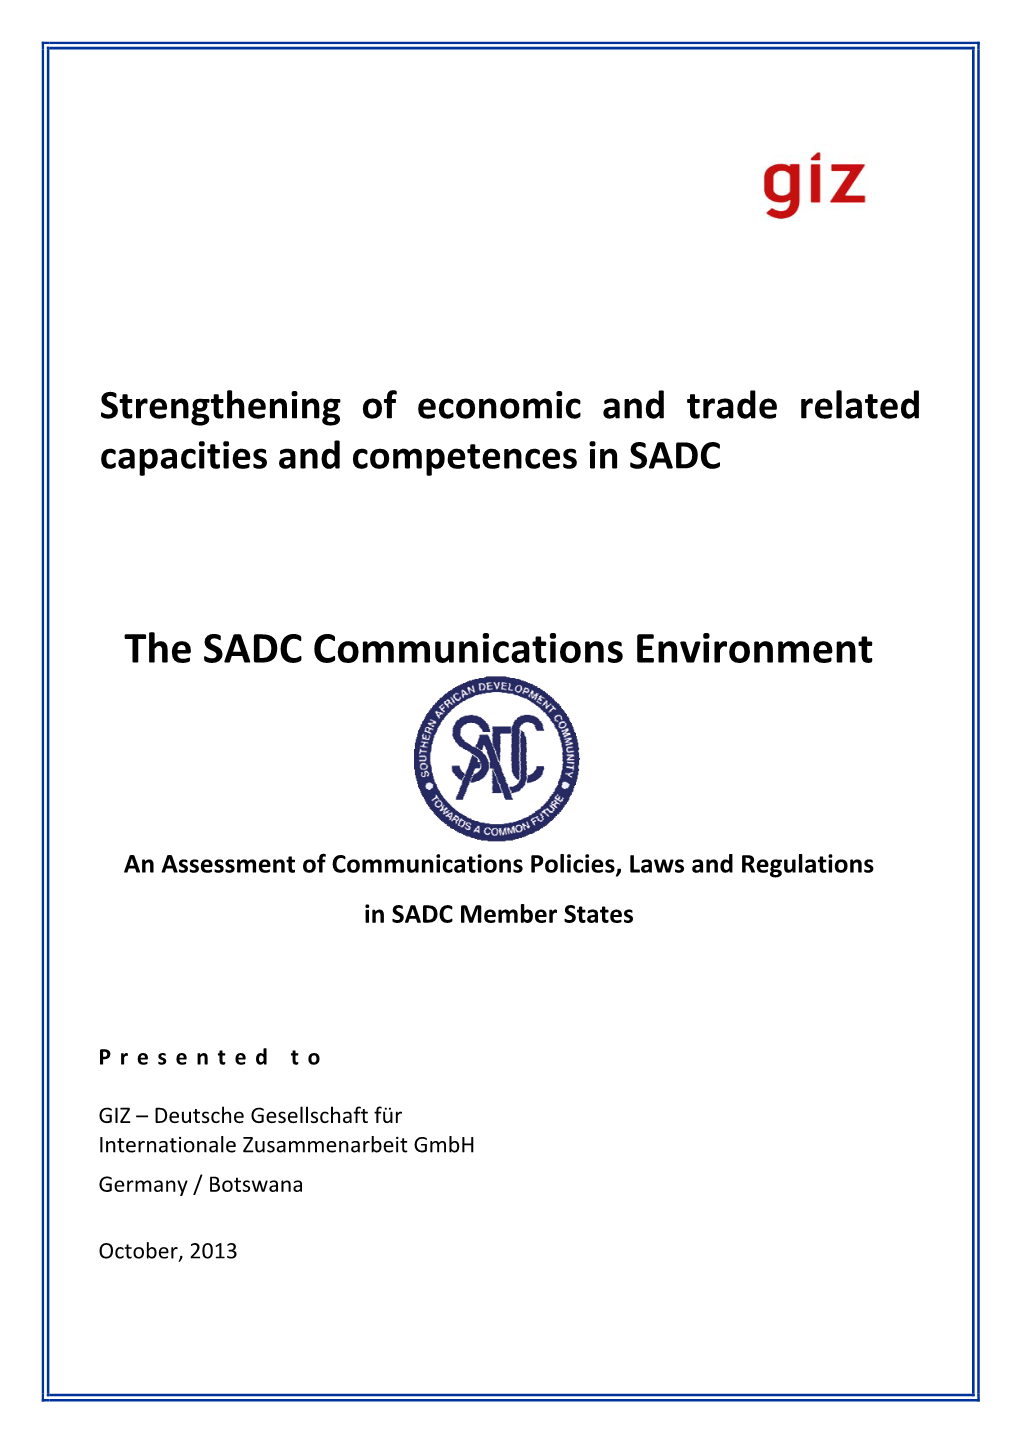 The SADC Communications Environment